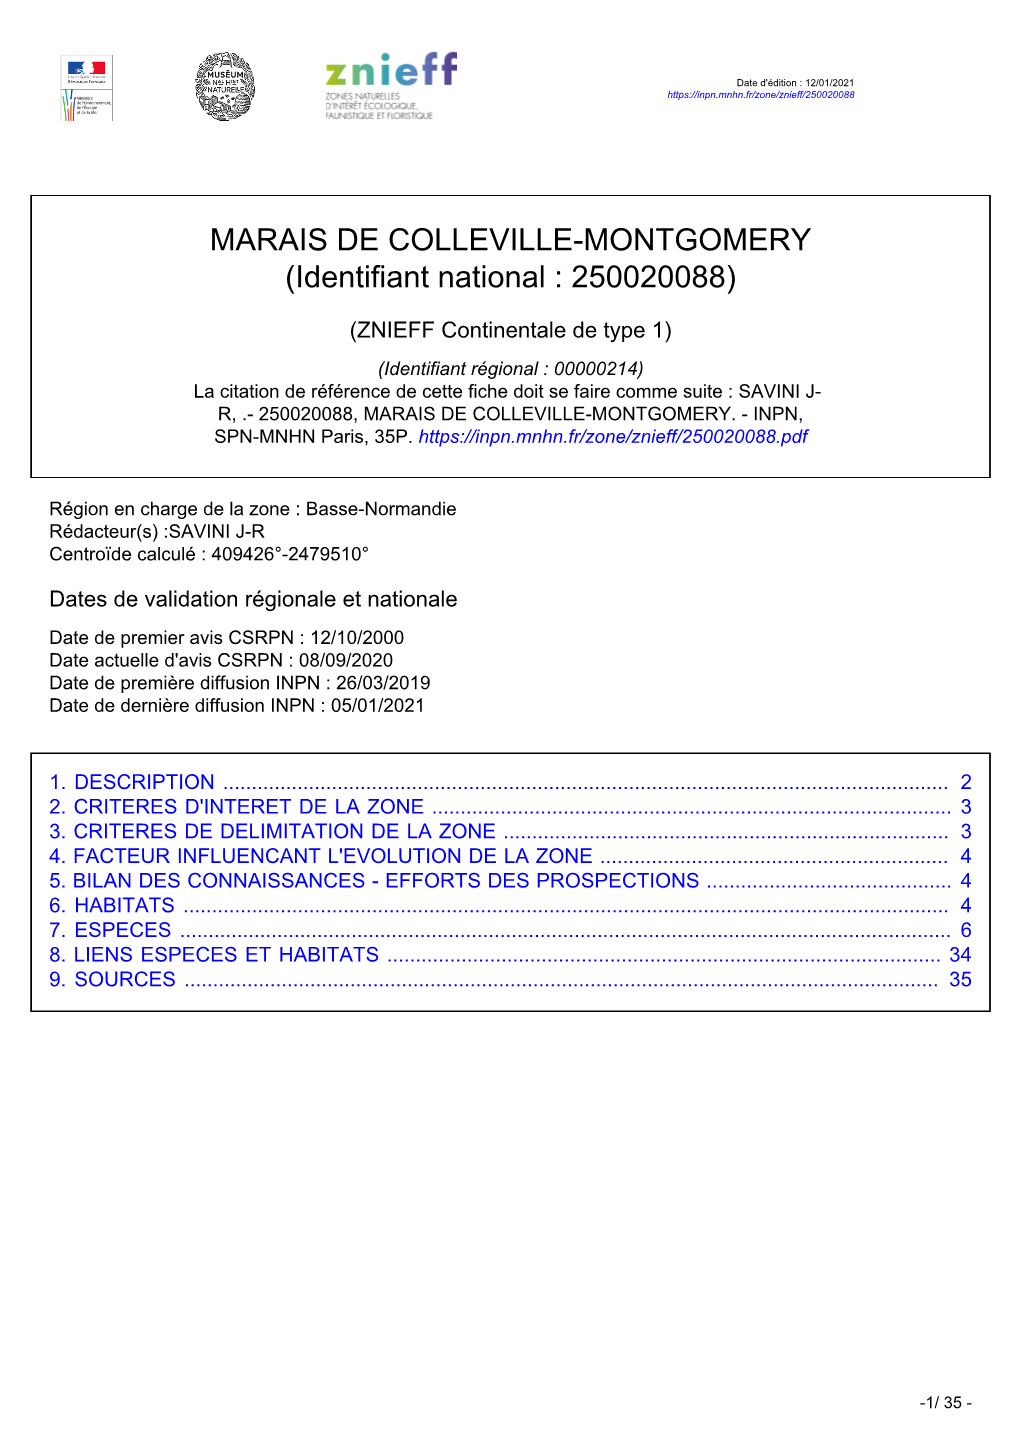 MARAIS DE COLLEVILLE-MONTGOMERY (Identifiant National : 250020088)